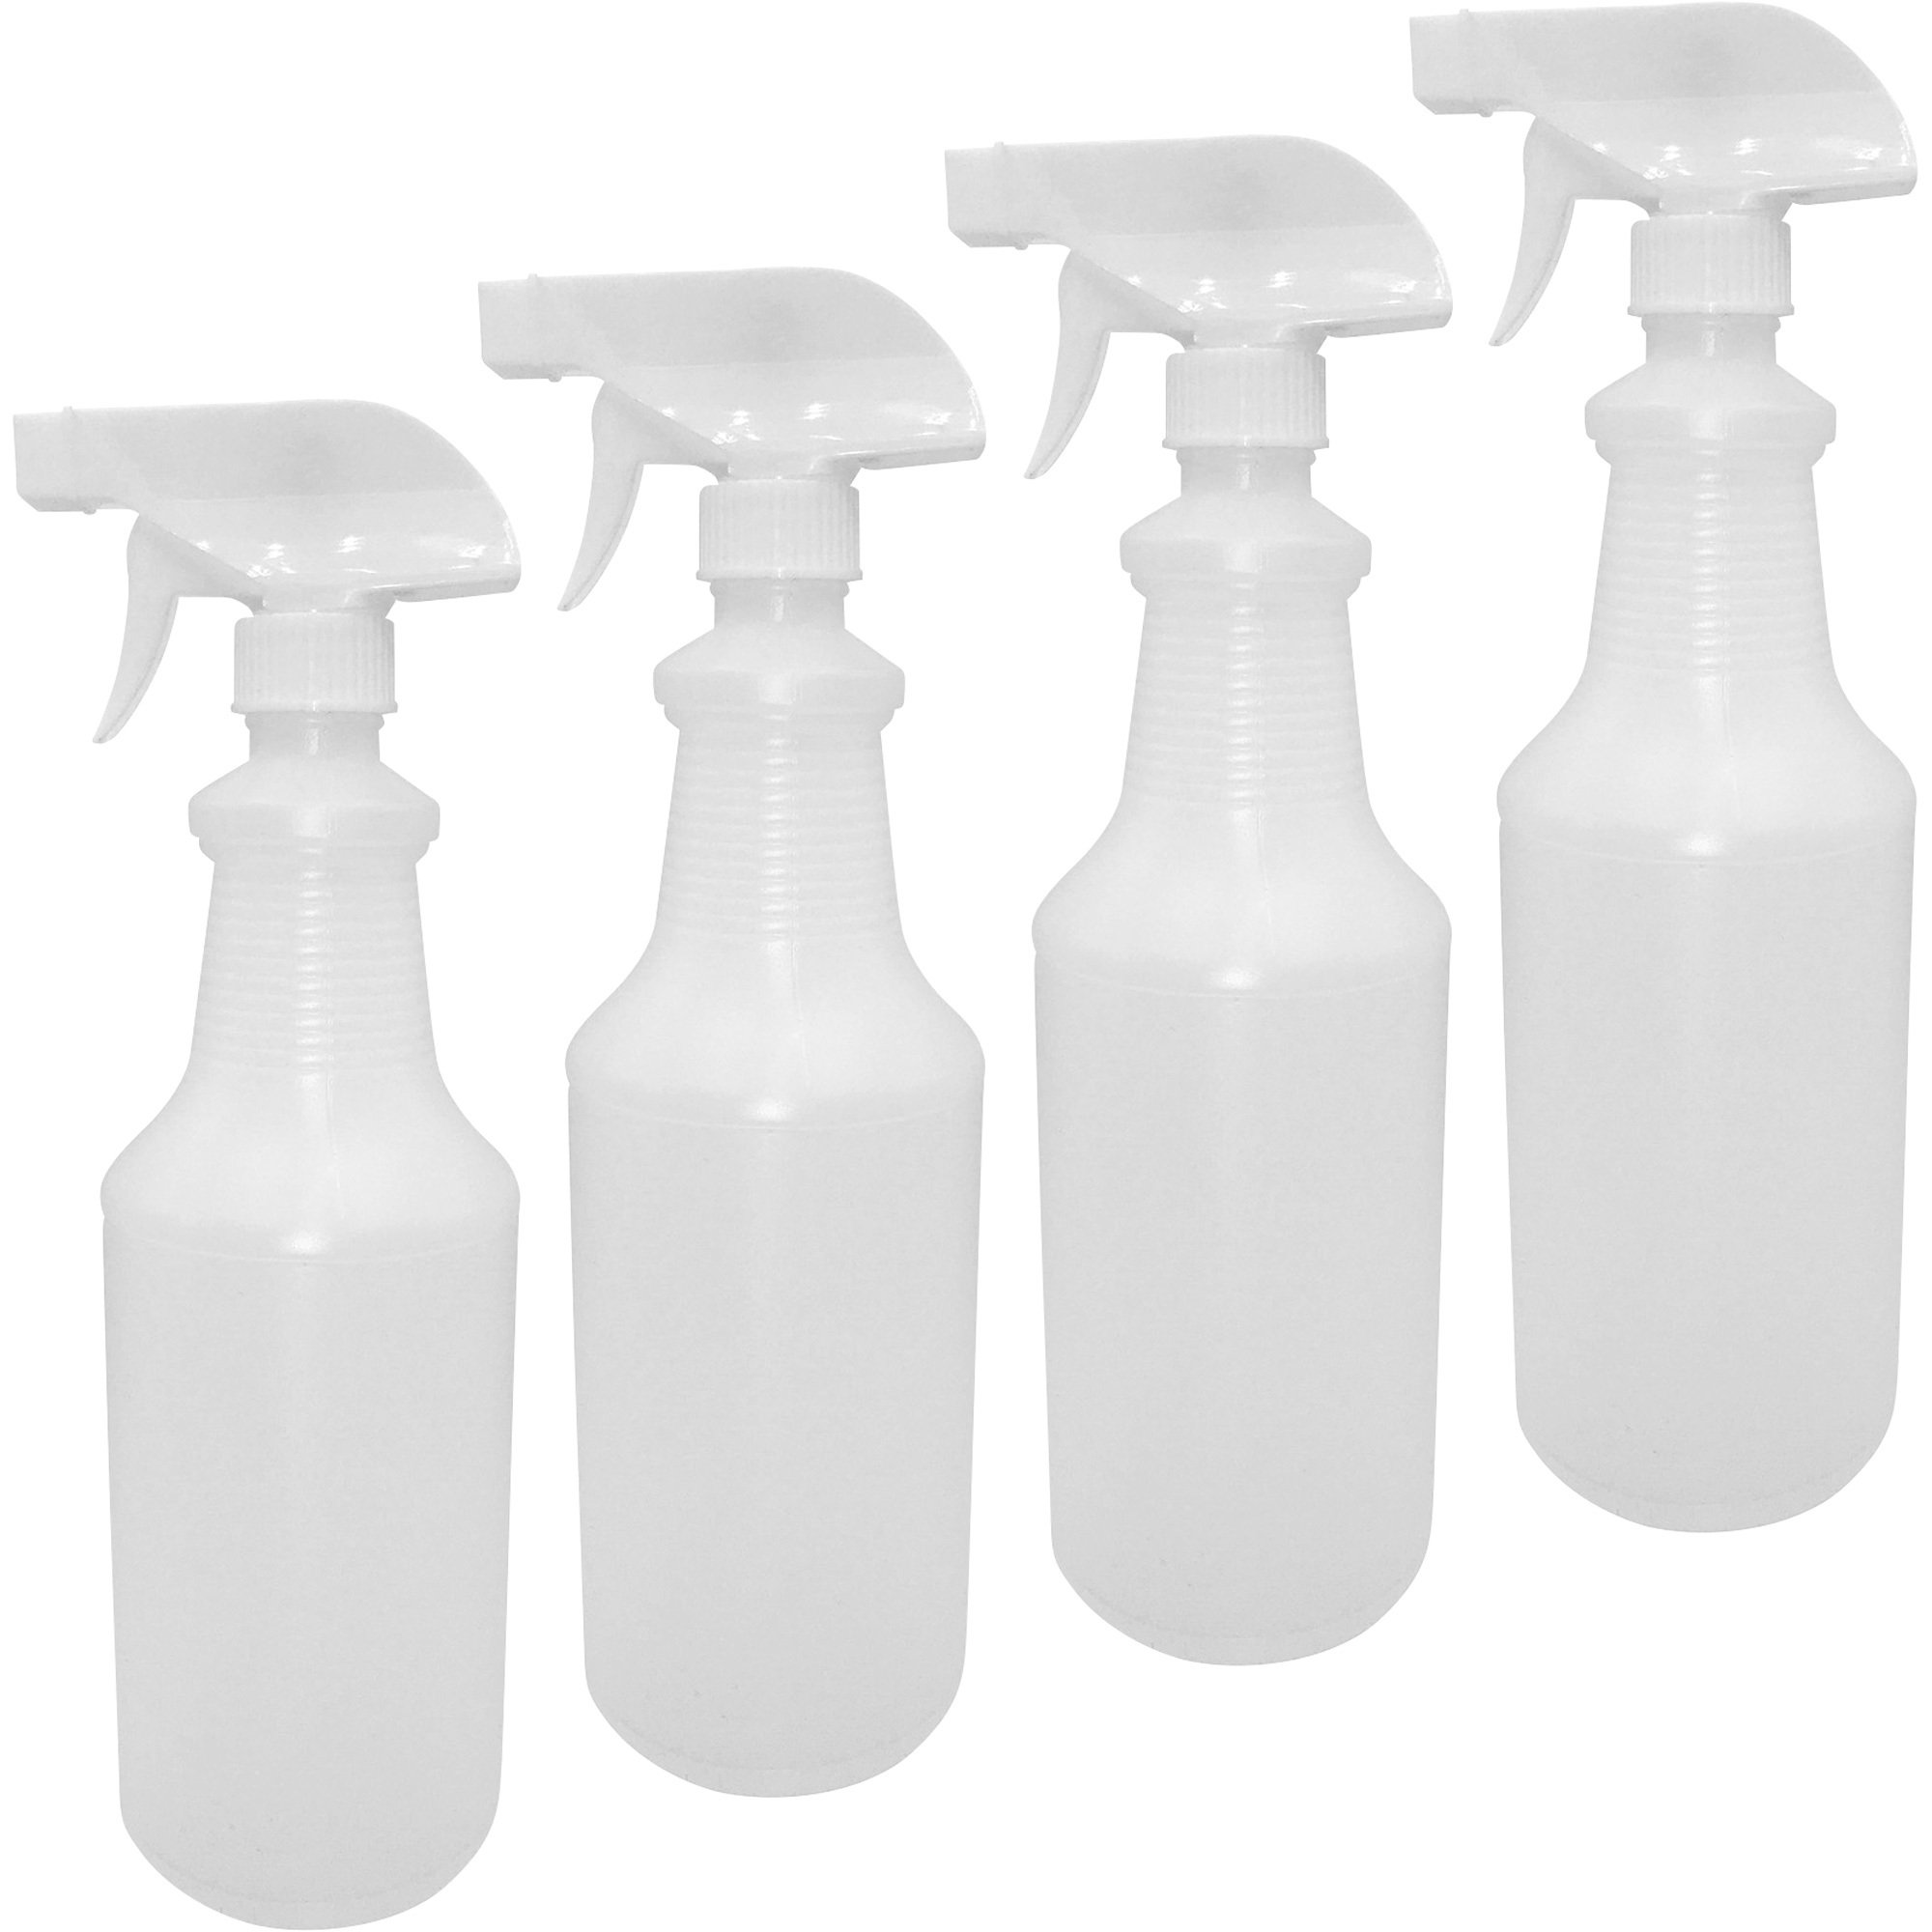 Chemical Resistant Spray Bottle - 32 Ounce